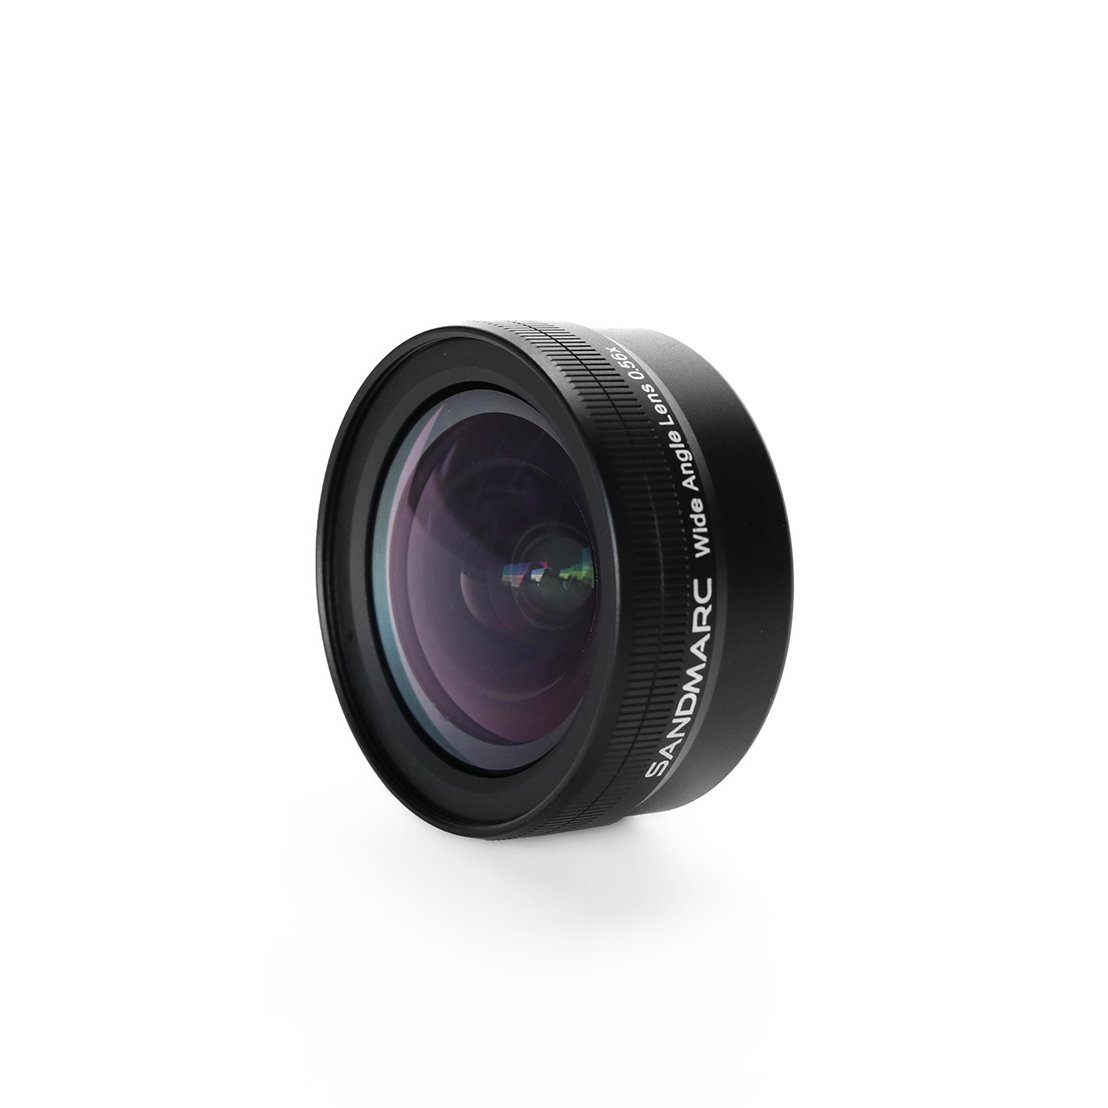 Sandmarc Wide Lens Edition for iPhone 8 Plus/7 Plus